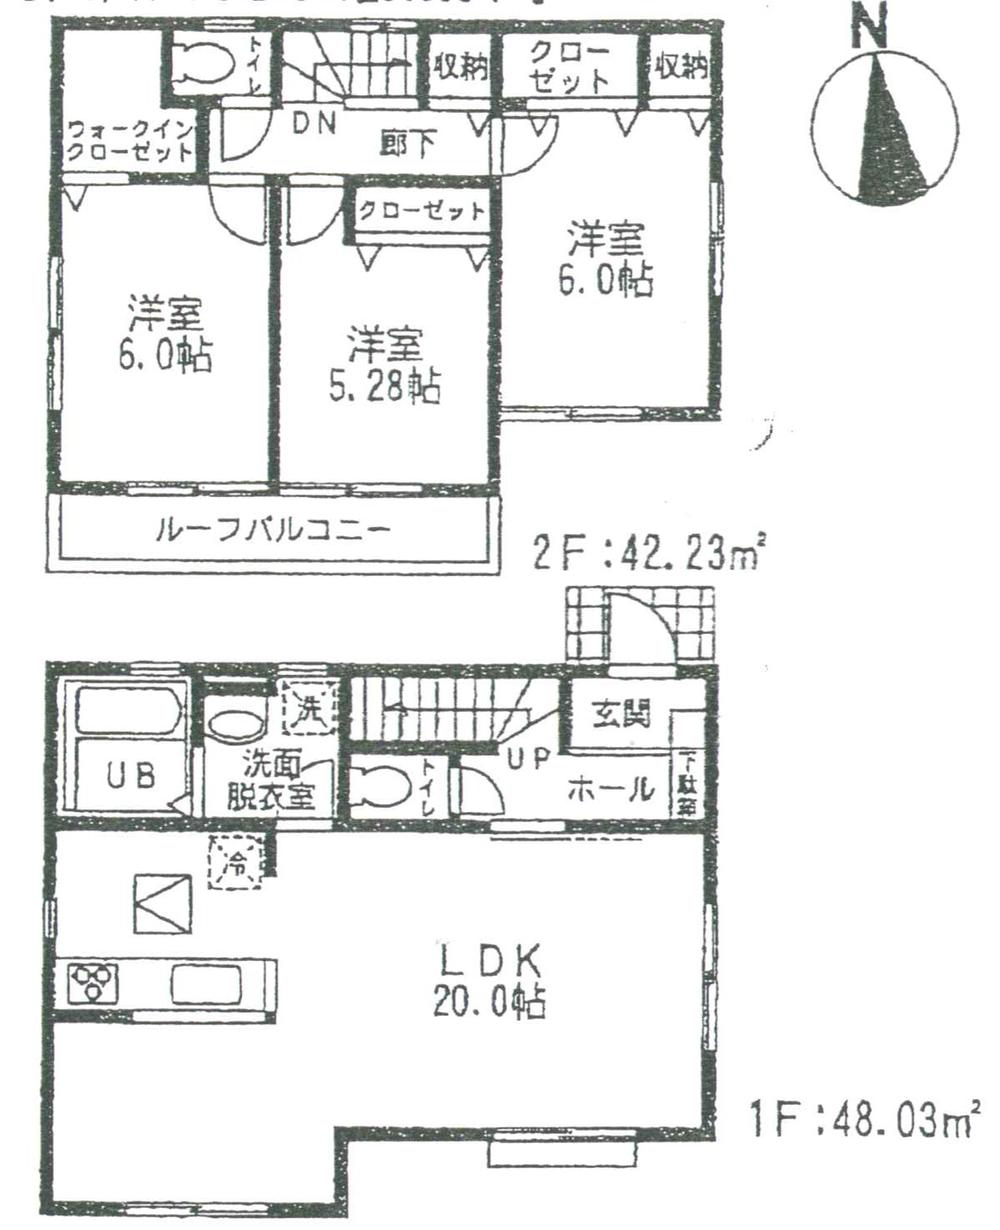 Floor plan. Price 34,300,000 yen, 3LDK, Land area 101.26 sq m , Building area 90.26 sq m